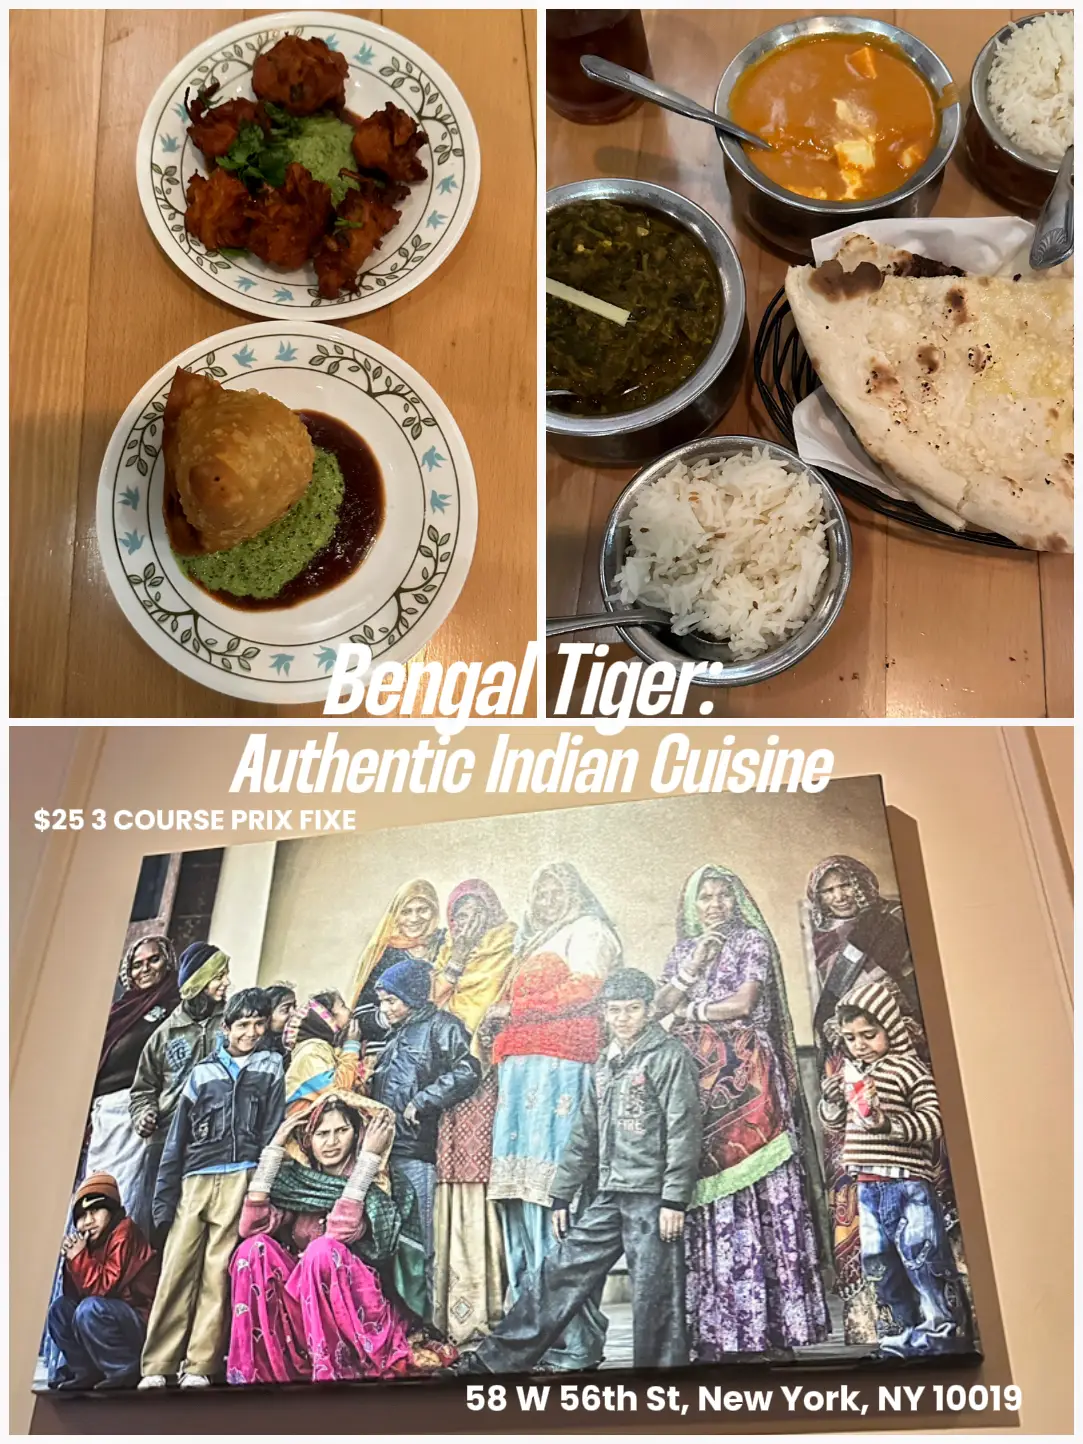 Bengal Tiger, one of my favorite Indian restaurants in Midtown